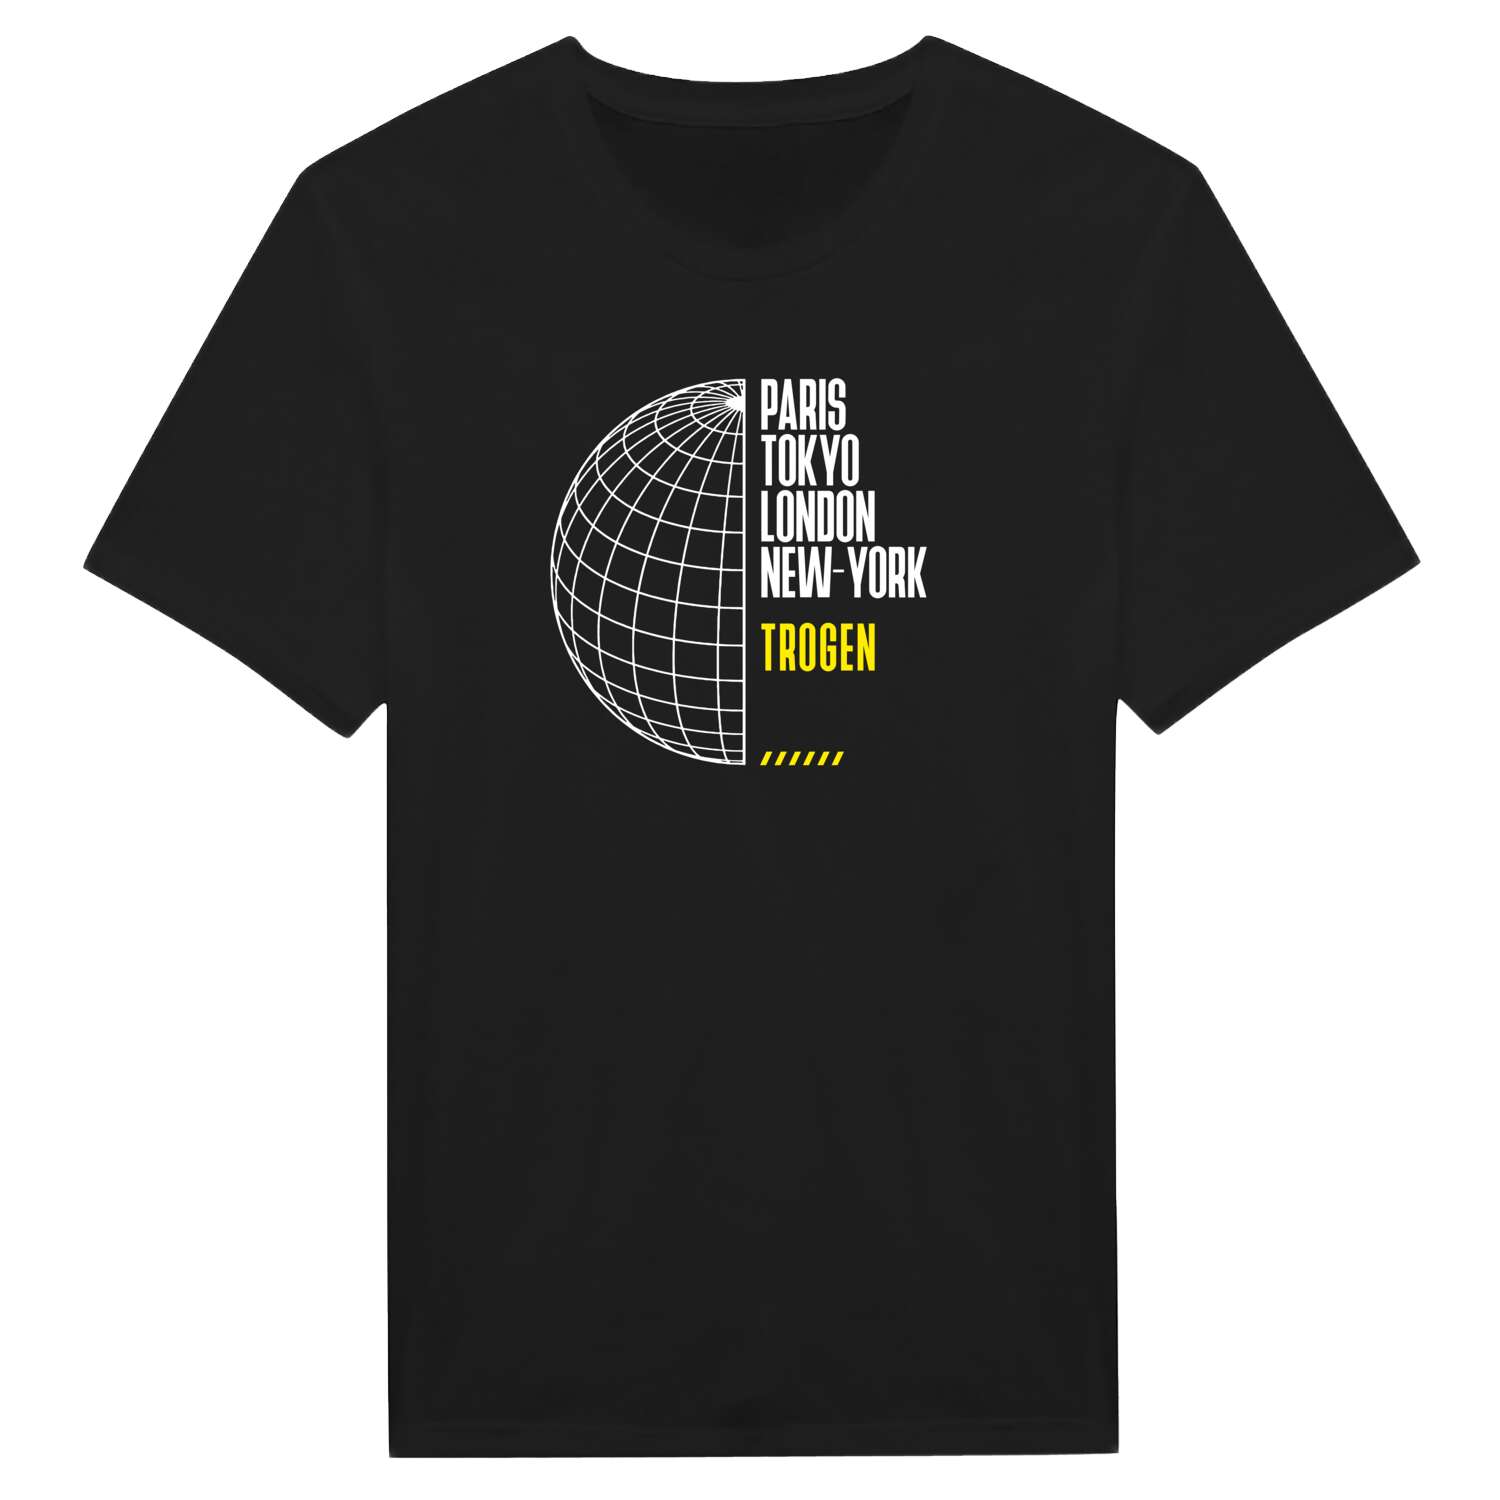 Trogen T-Shirt »Paris Tokyo London«